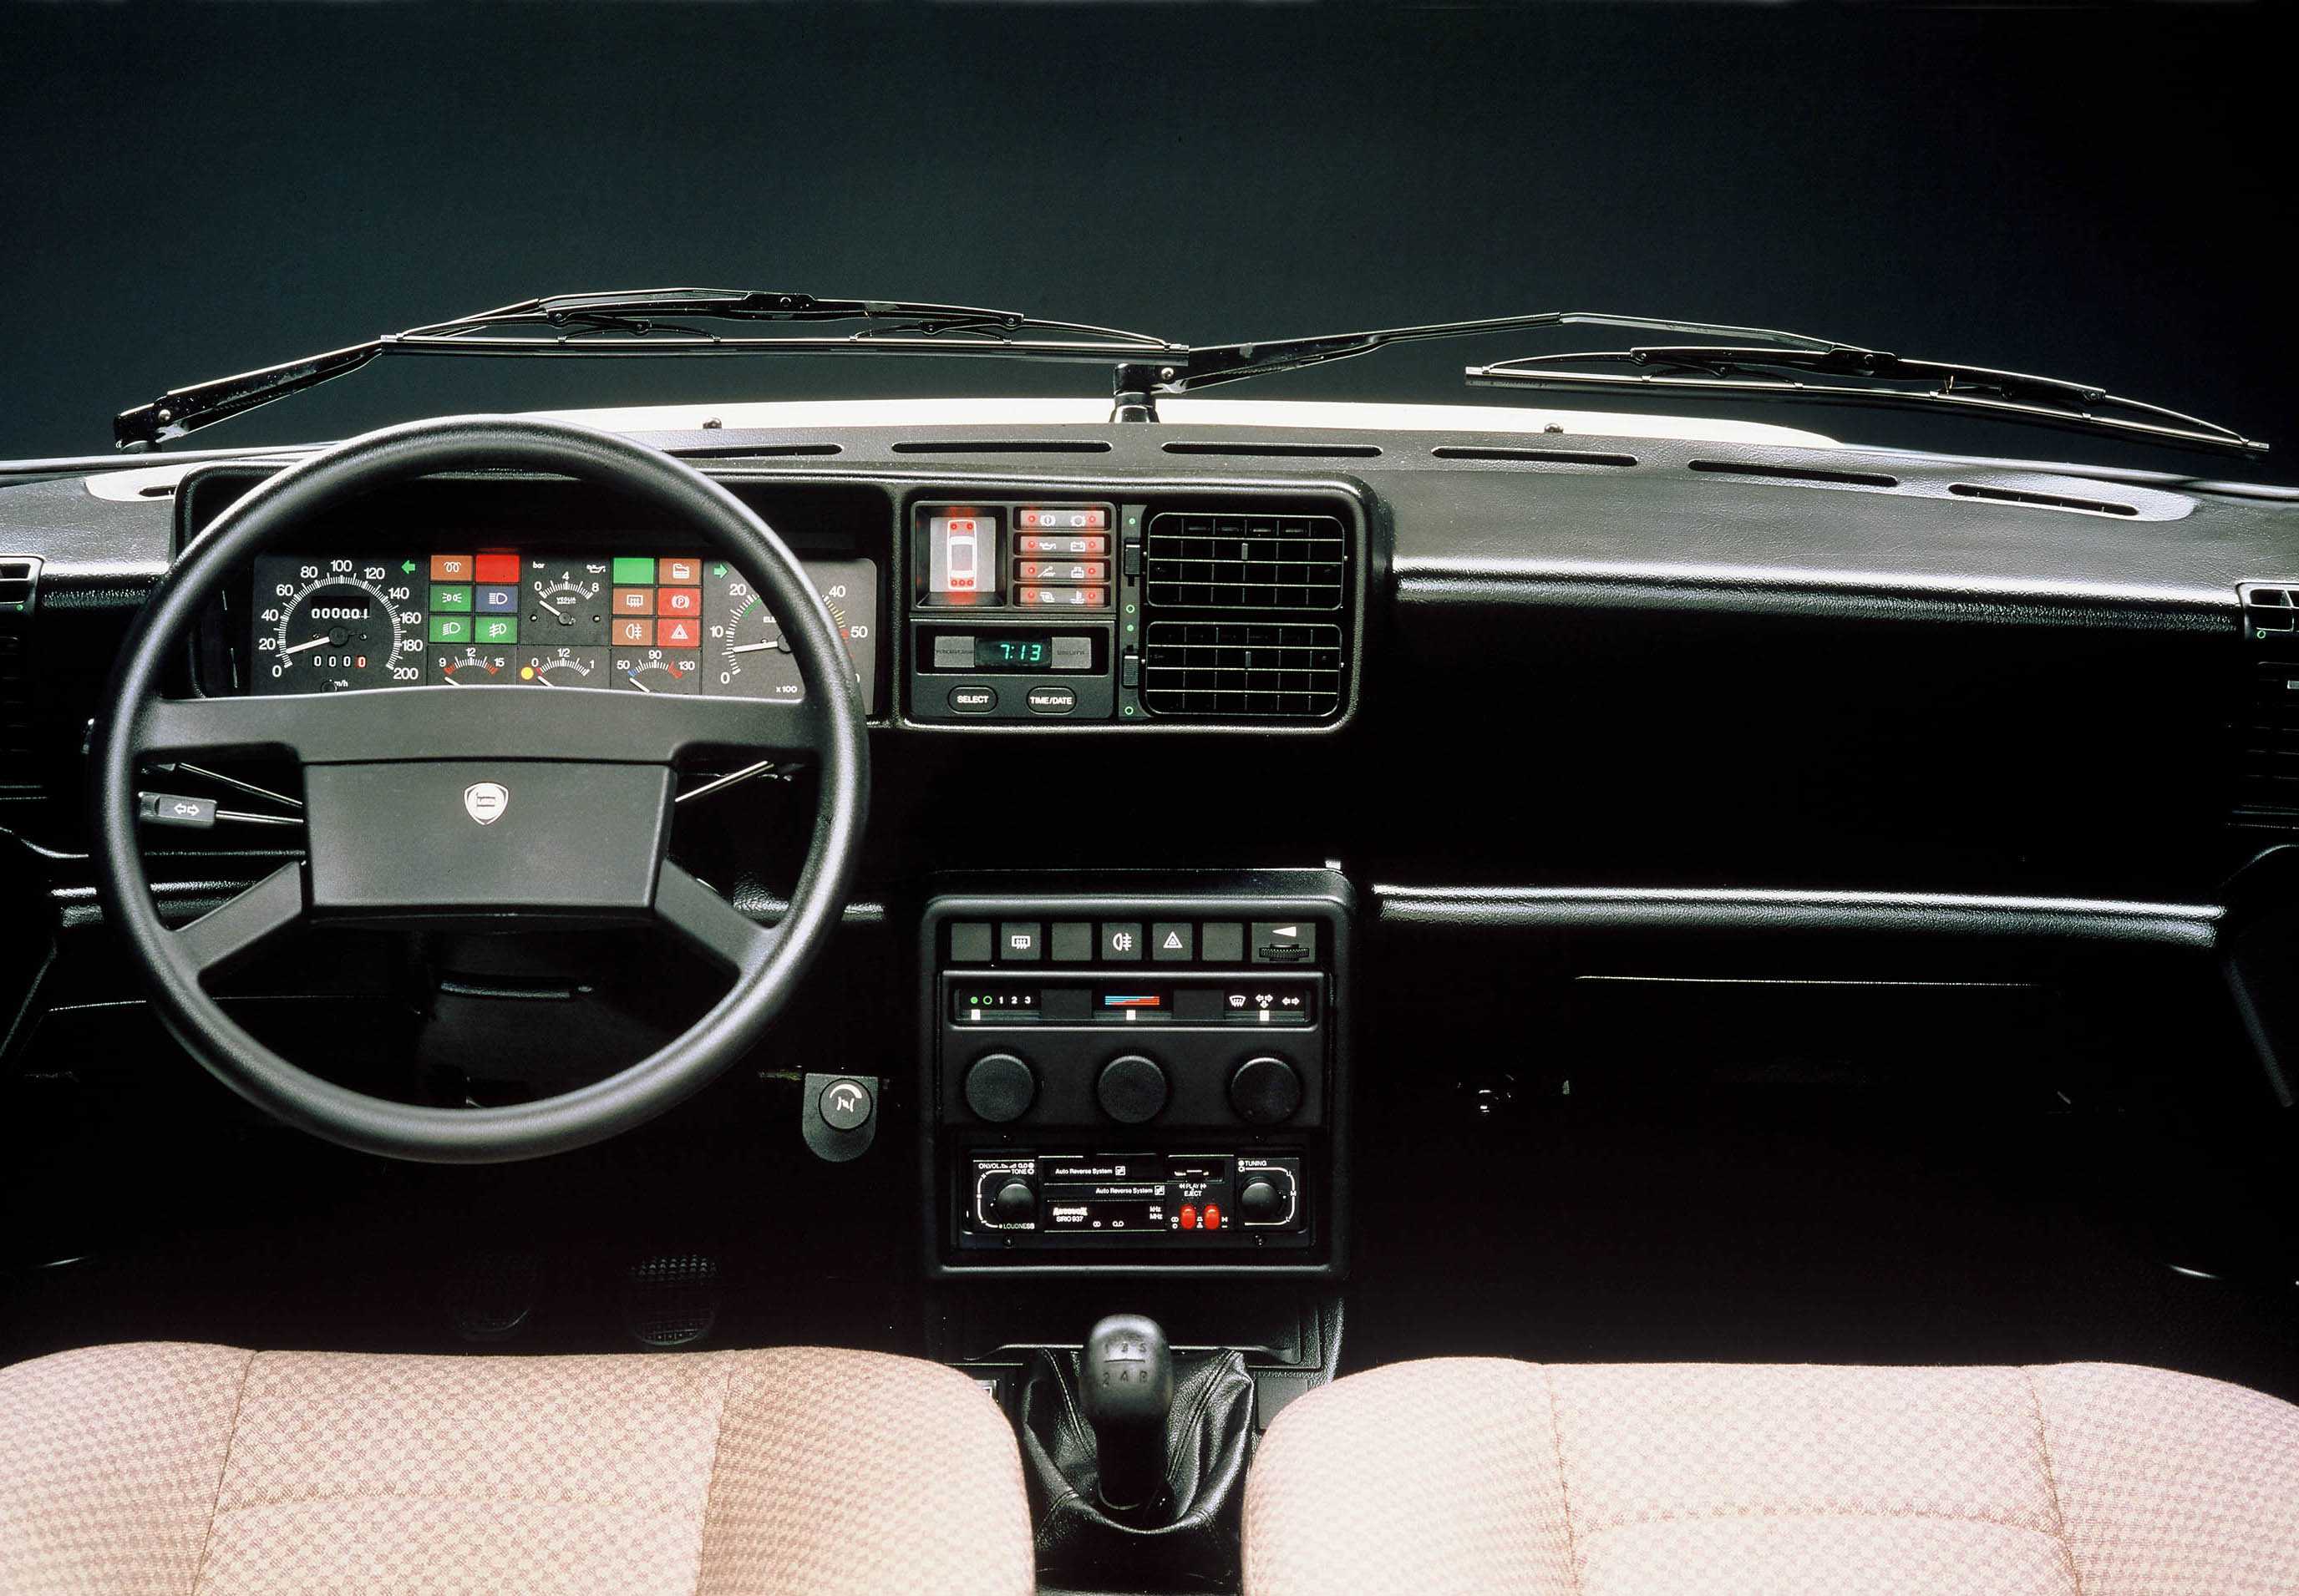 2X GASFEDER Dämpfer Heckklappe Lancia Prisma 831 Limousine 1983-1989